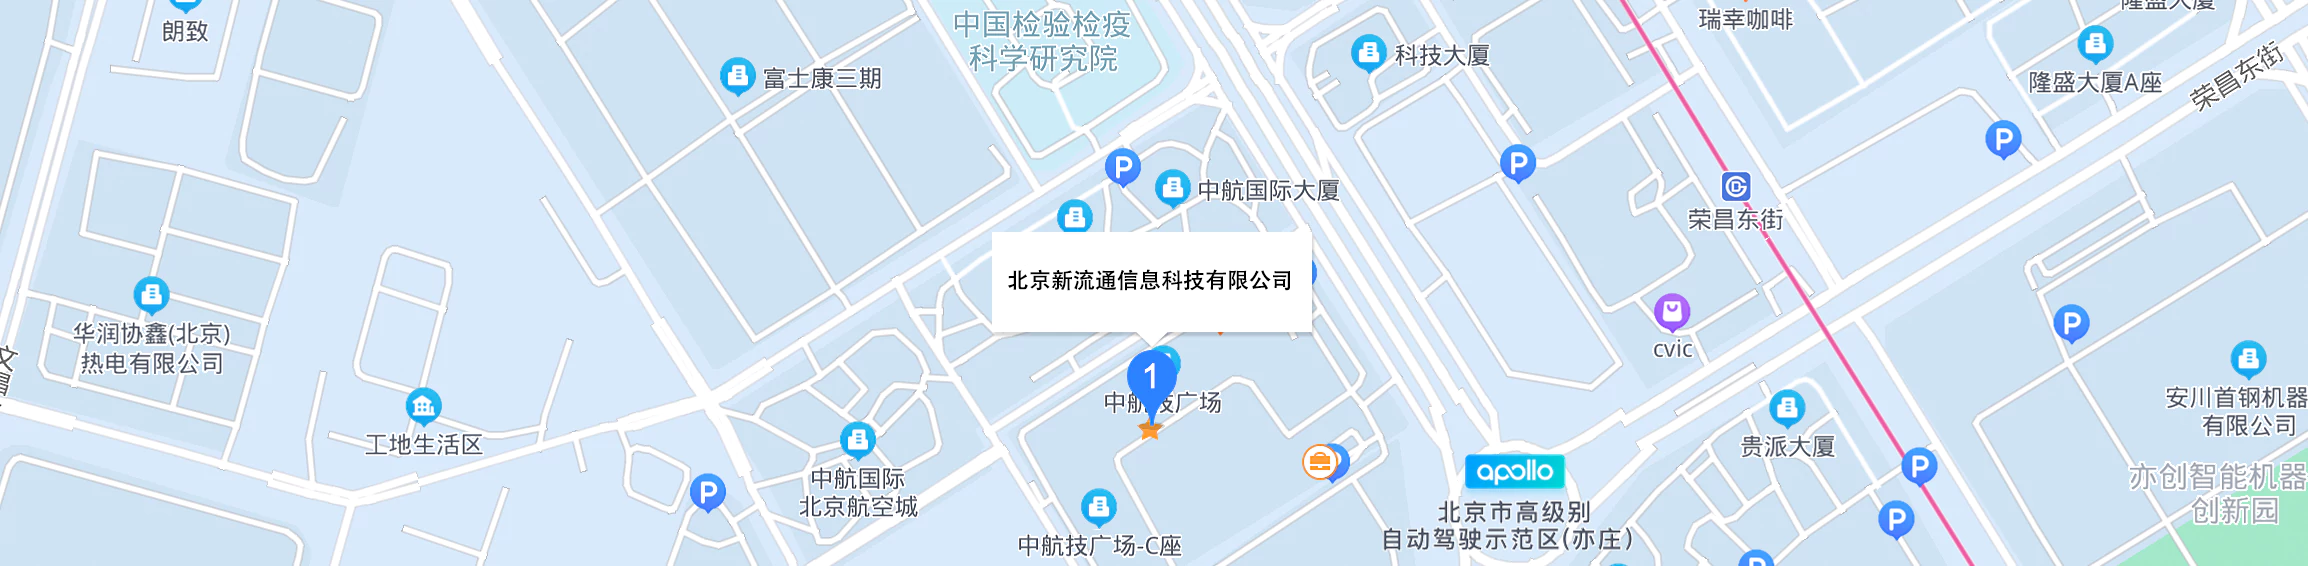 home_company_map2 拷贝